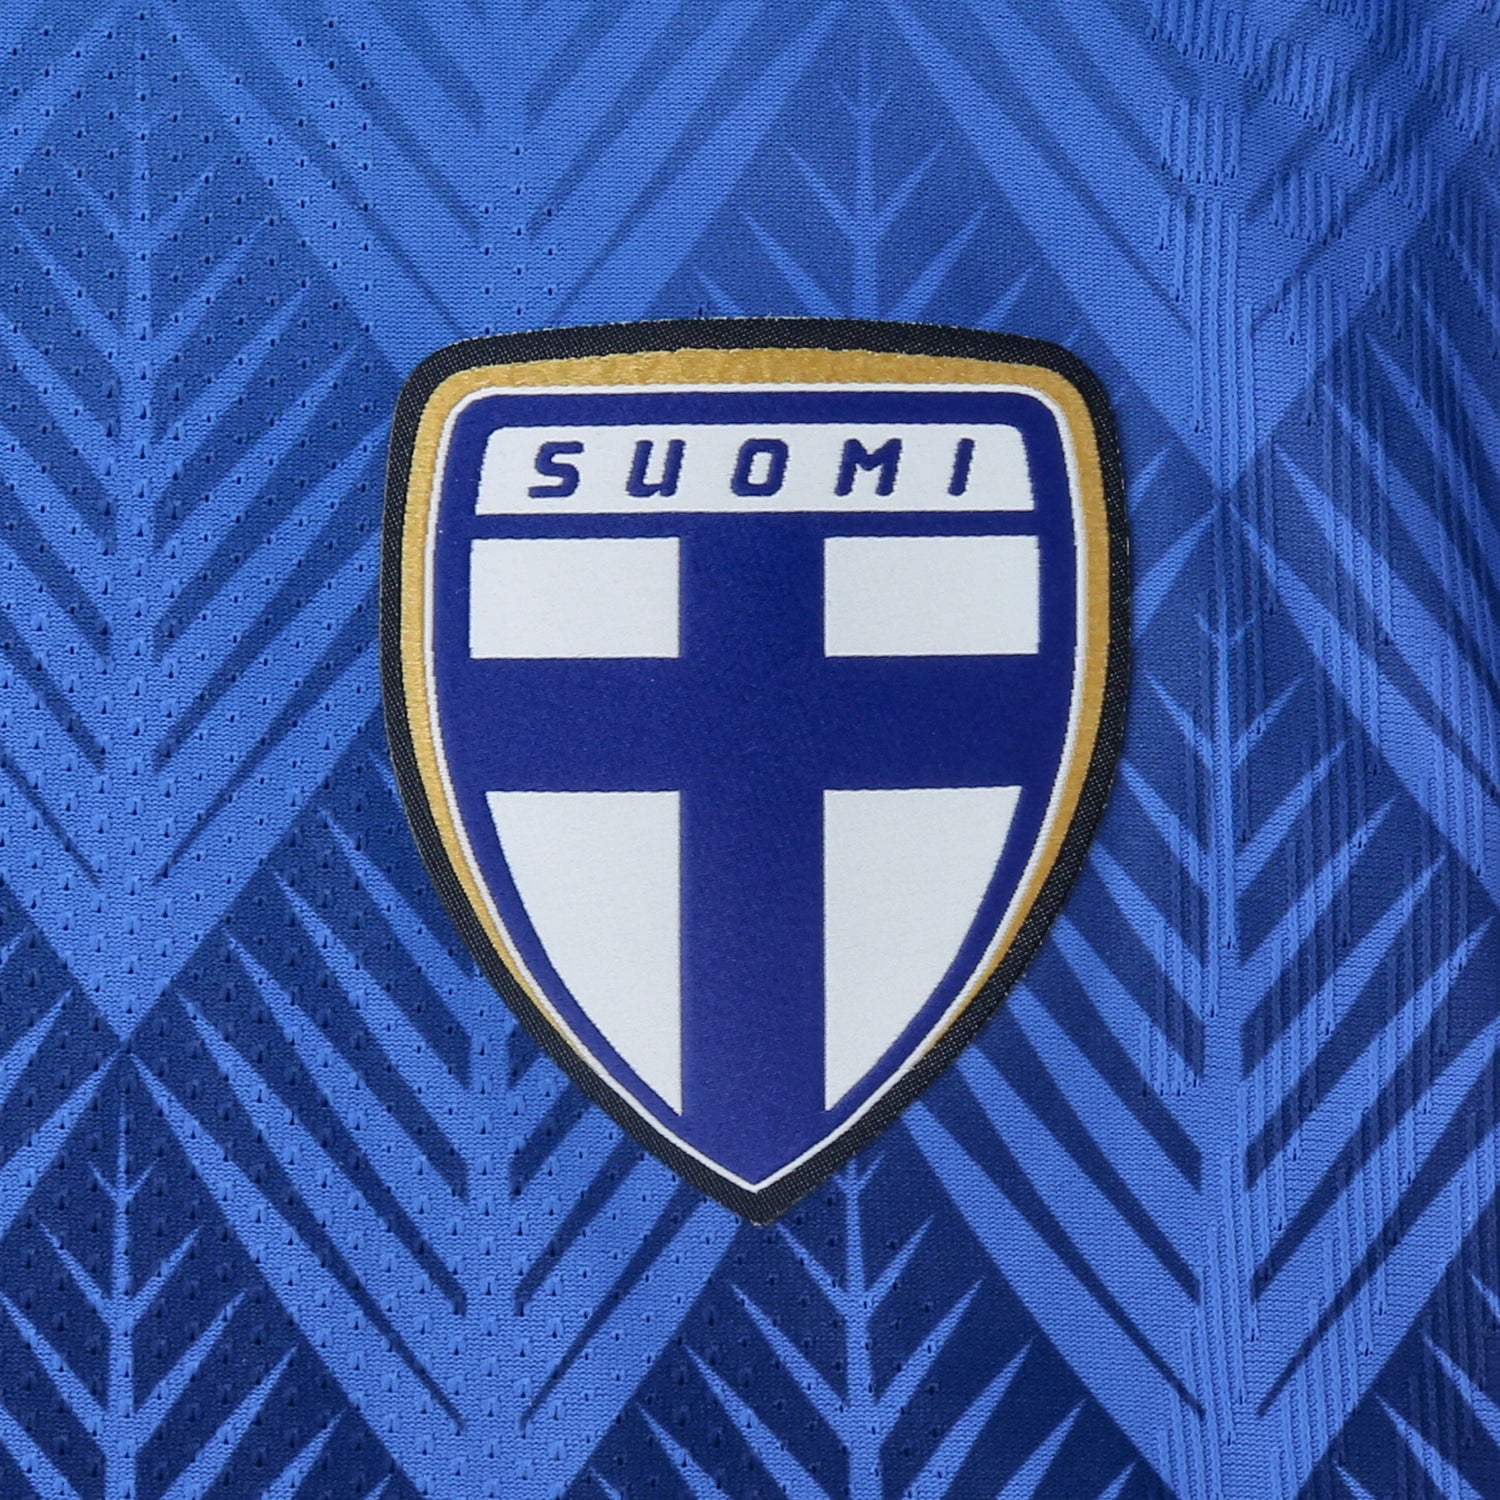 Finland Official Away Jersey 2022/23, Valakari Print